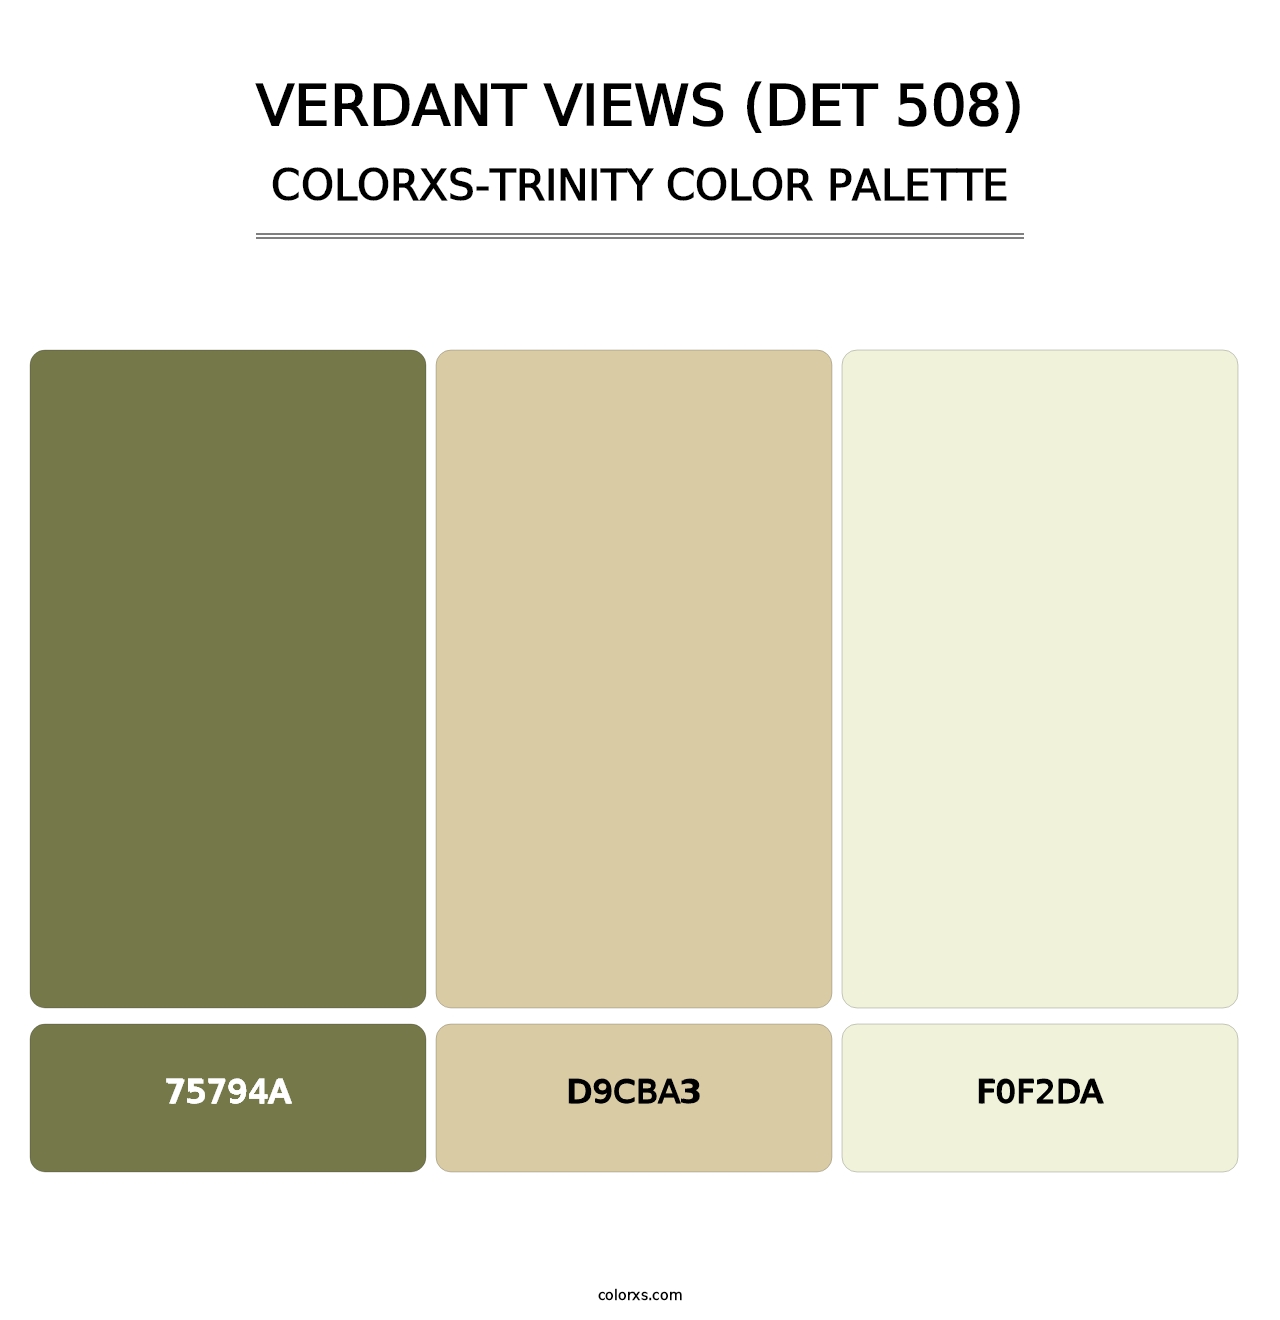 Verdant Views (DET 508) - Colorxs Trinity Palette